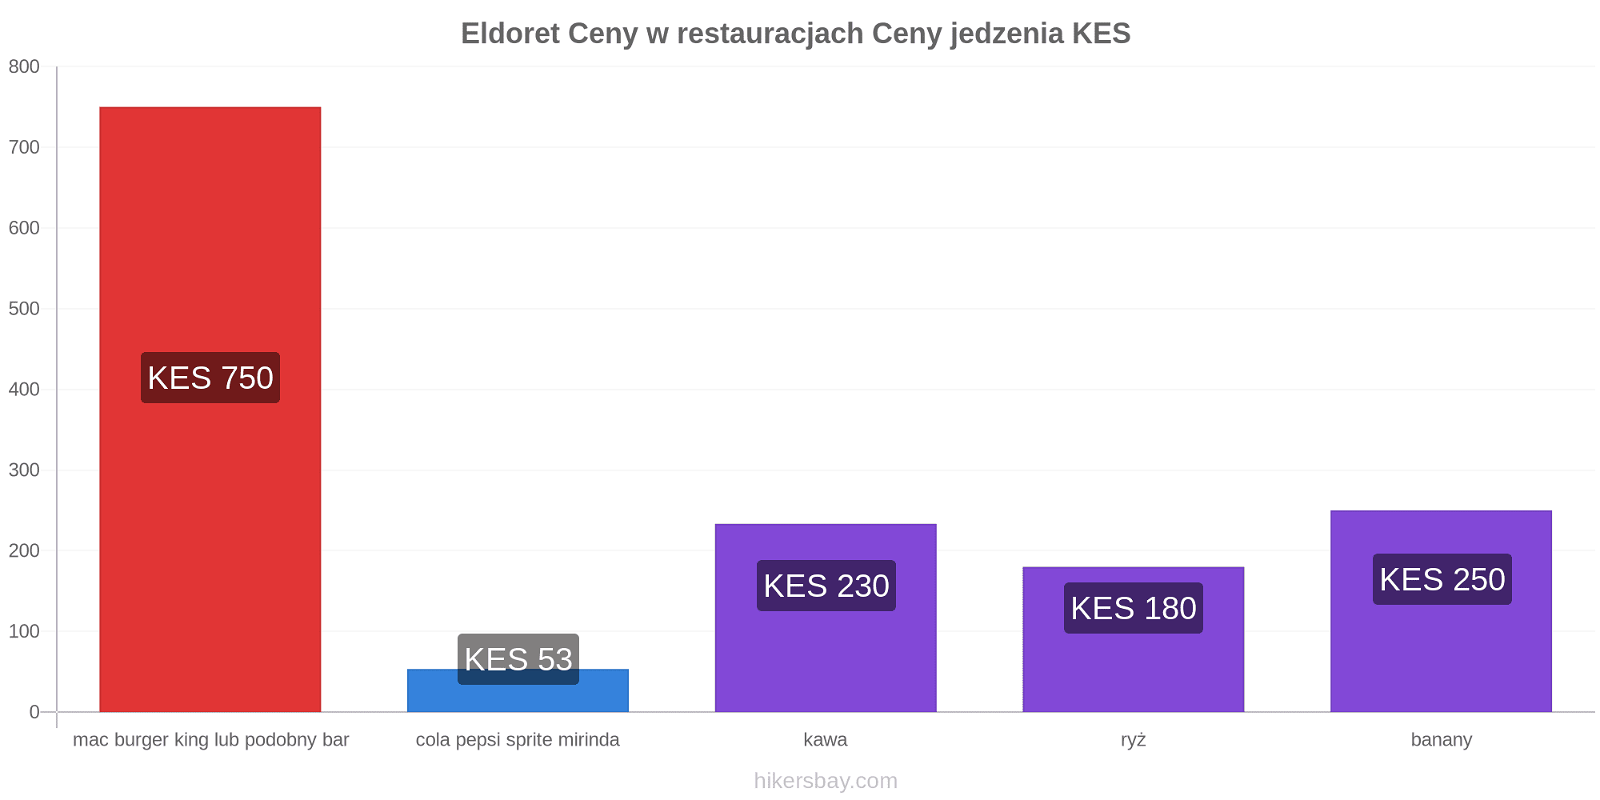 Eldoret zmiany cen hikersbay.com